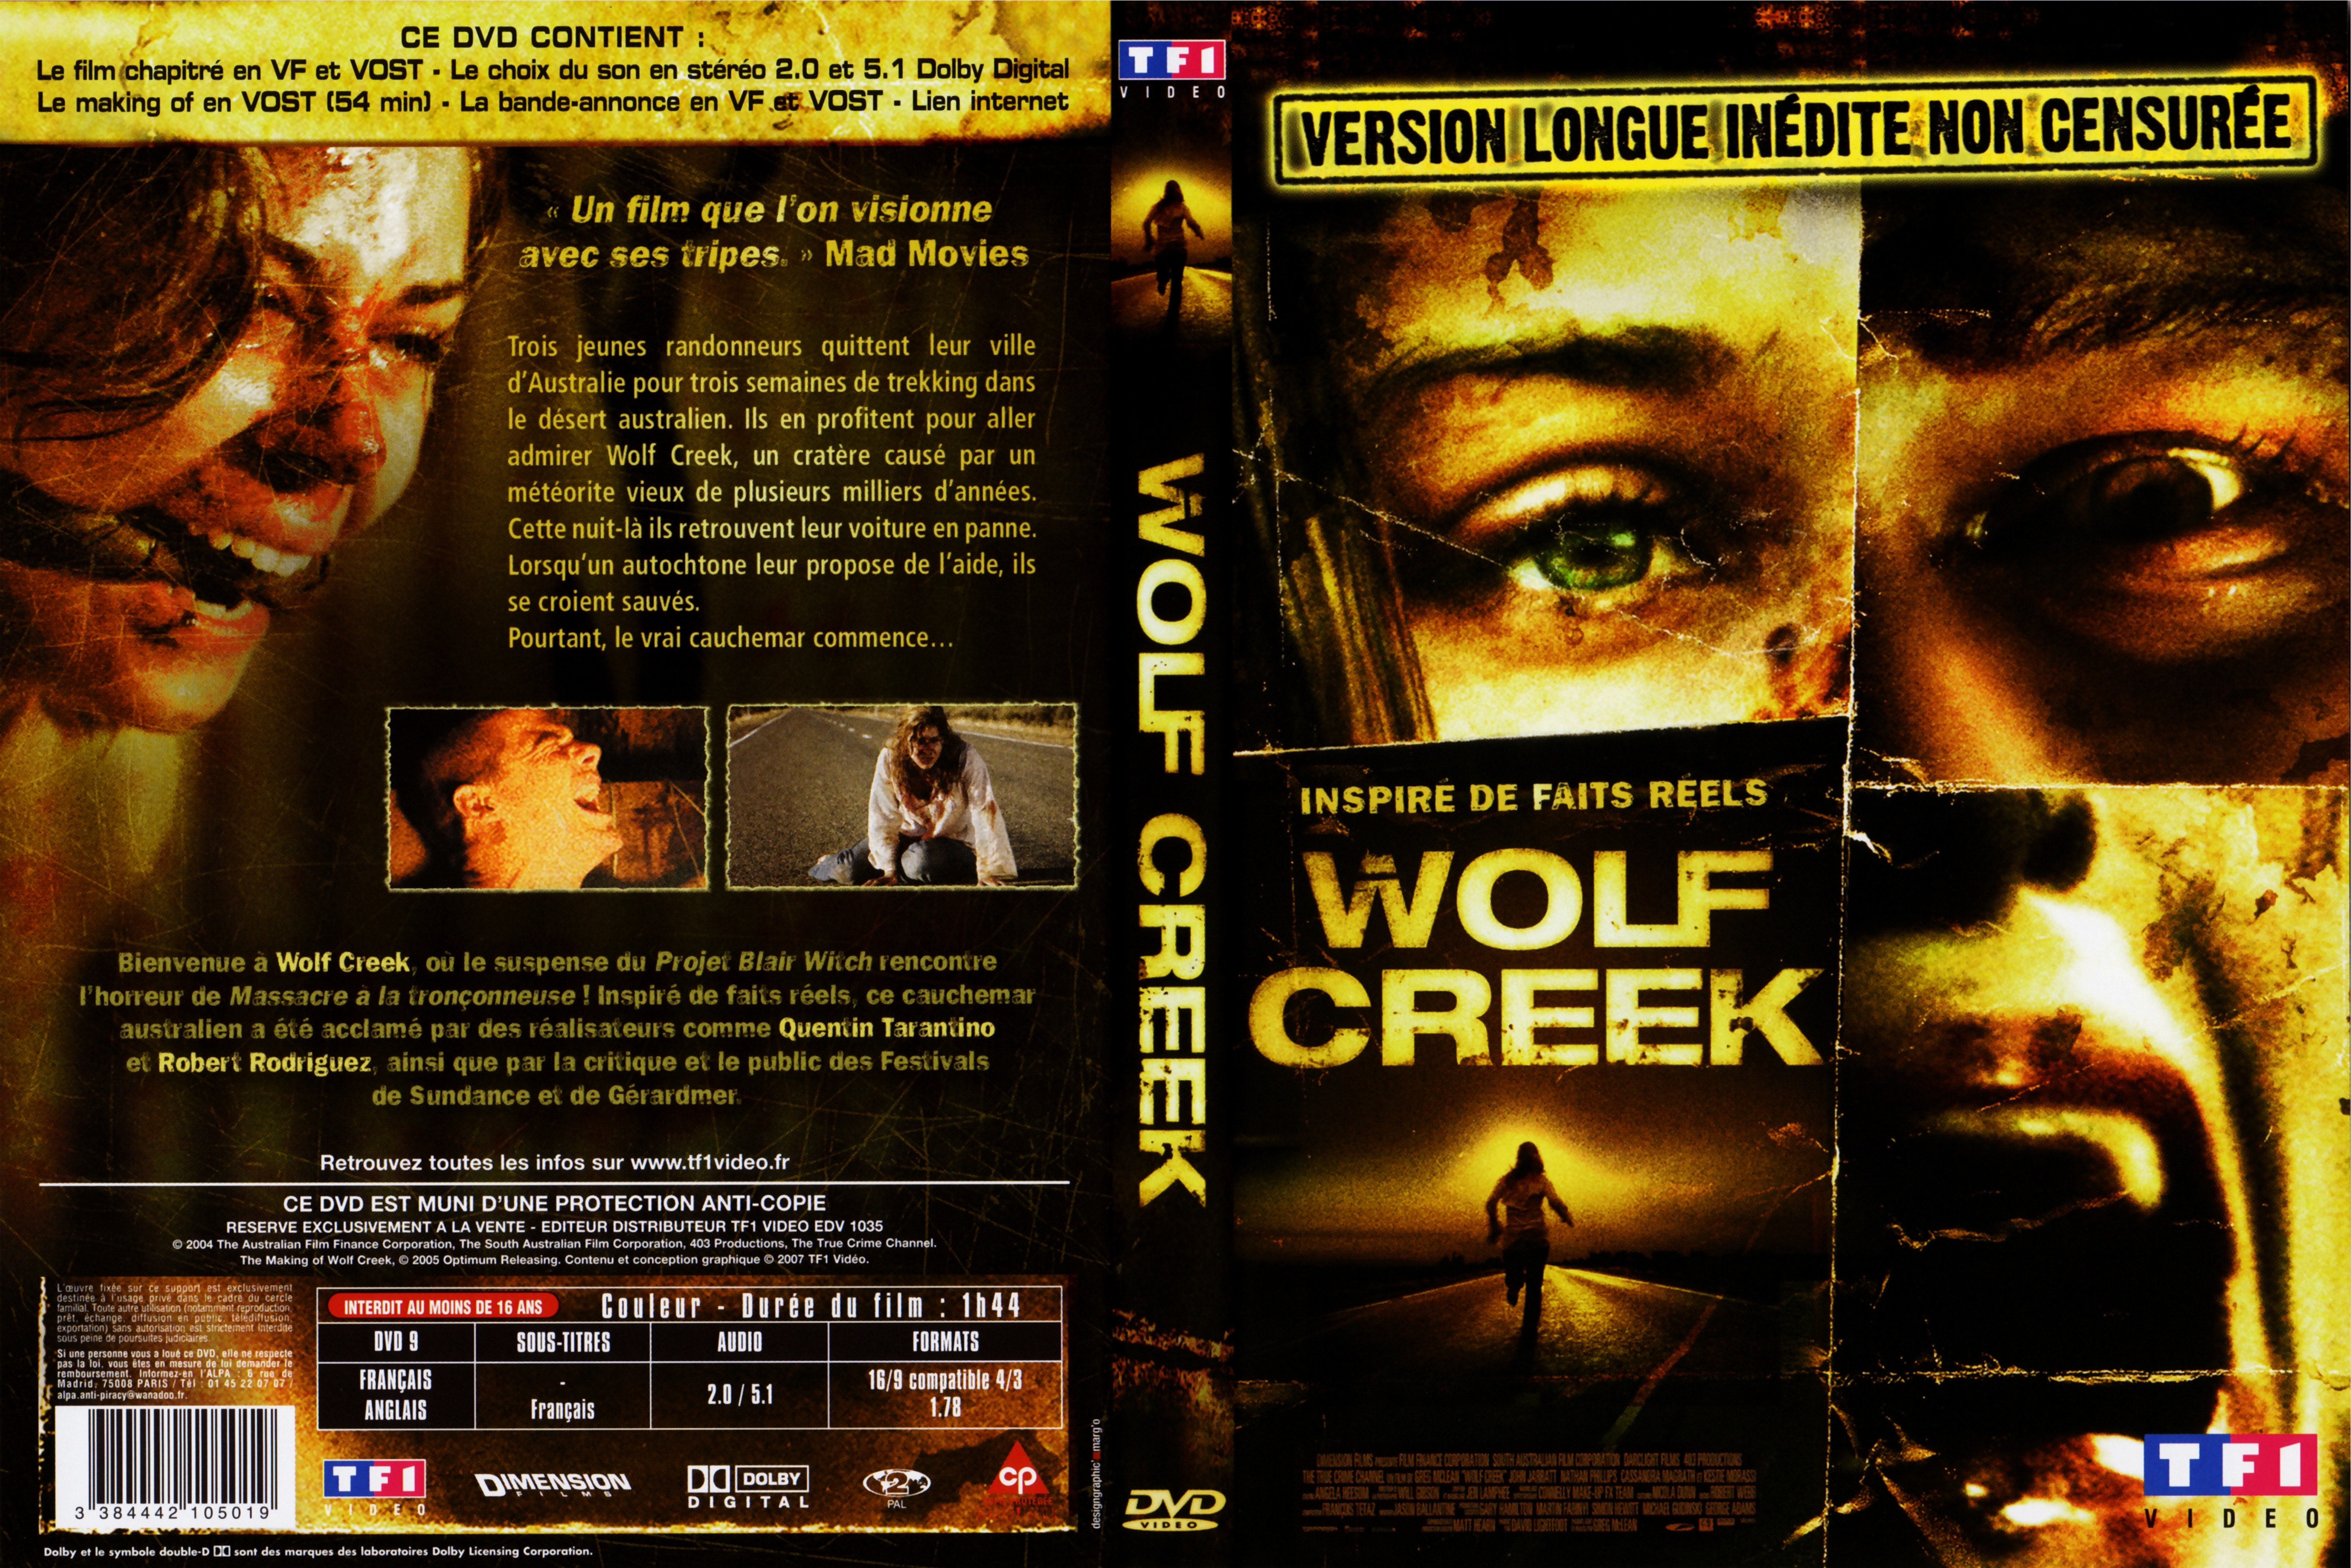 Jaquette DVD Wolf creek v2